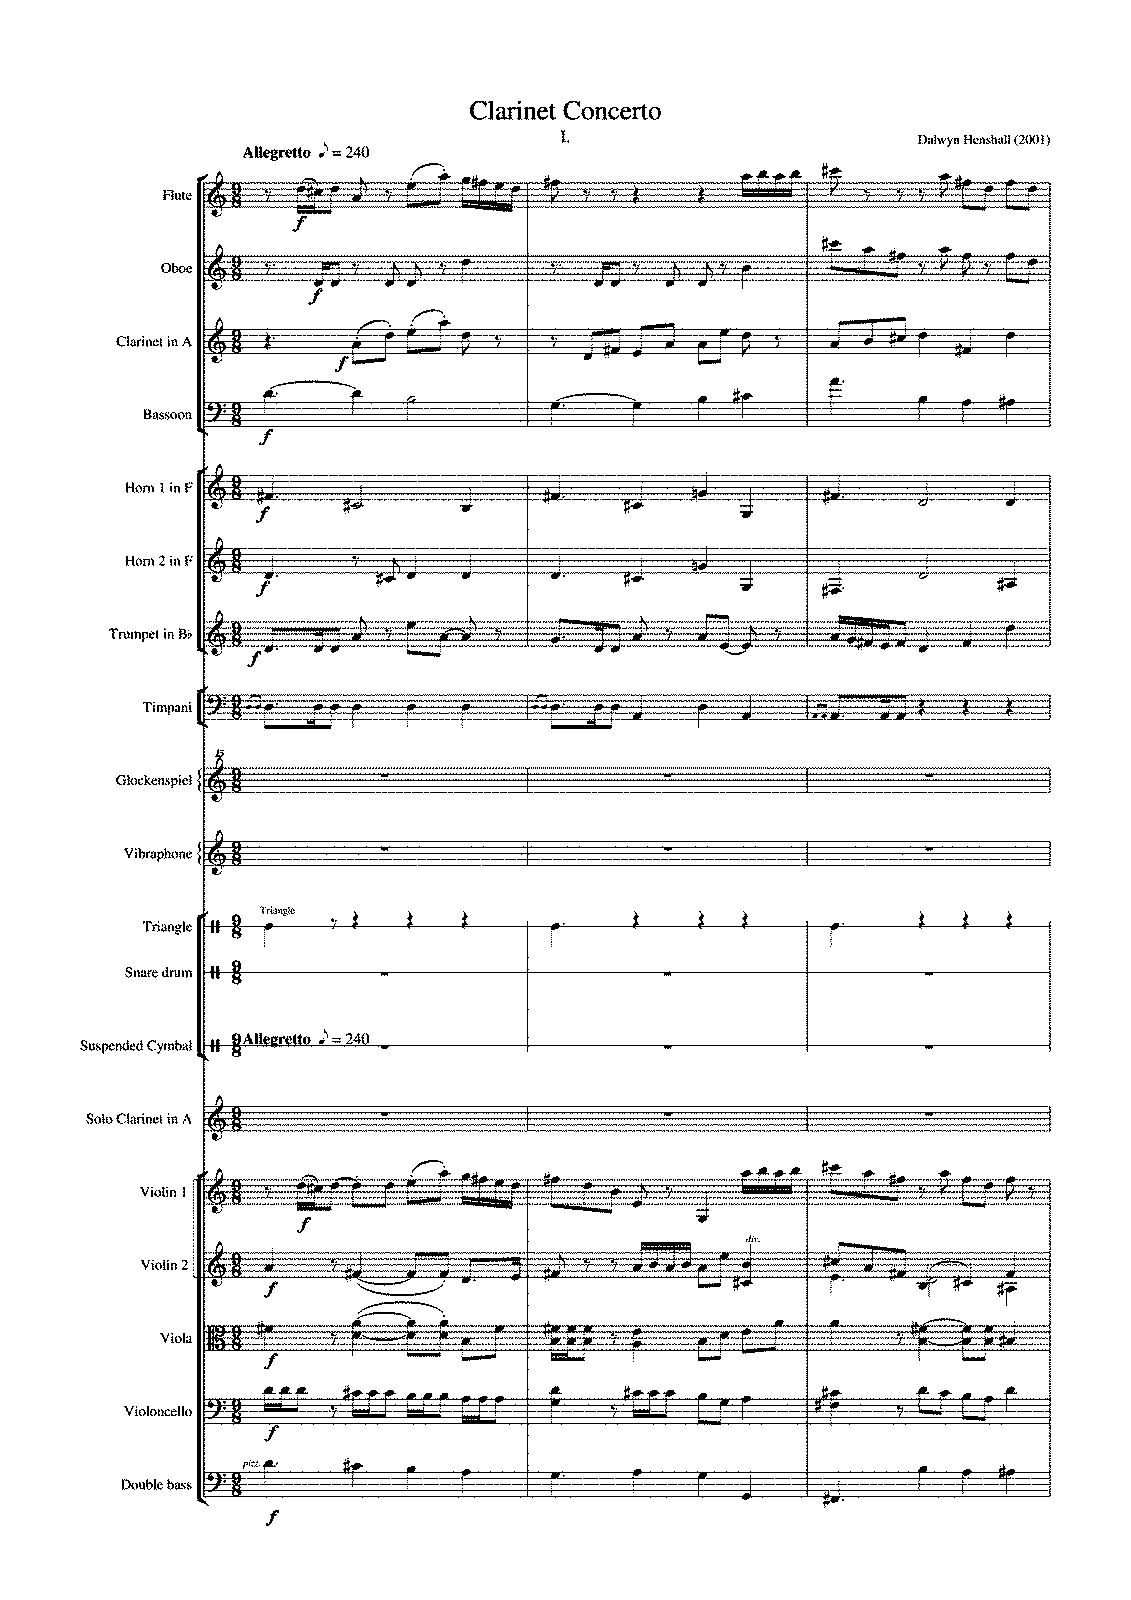 artie shaw clarinet concerto pdf free